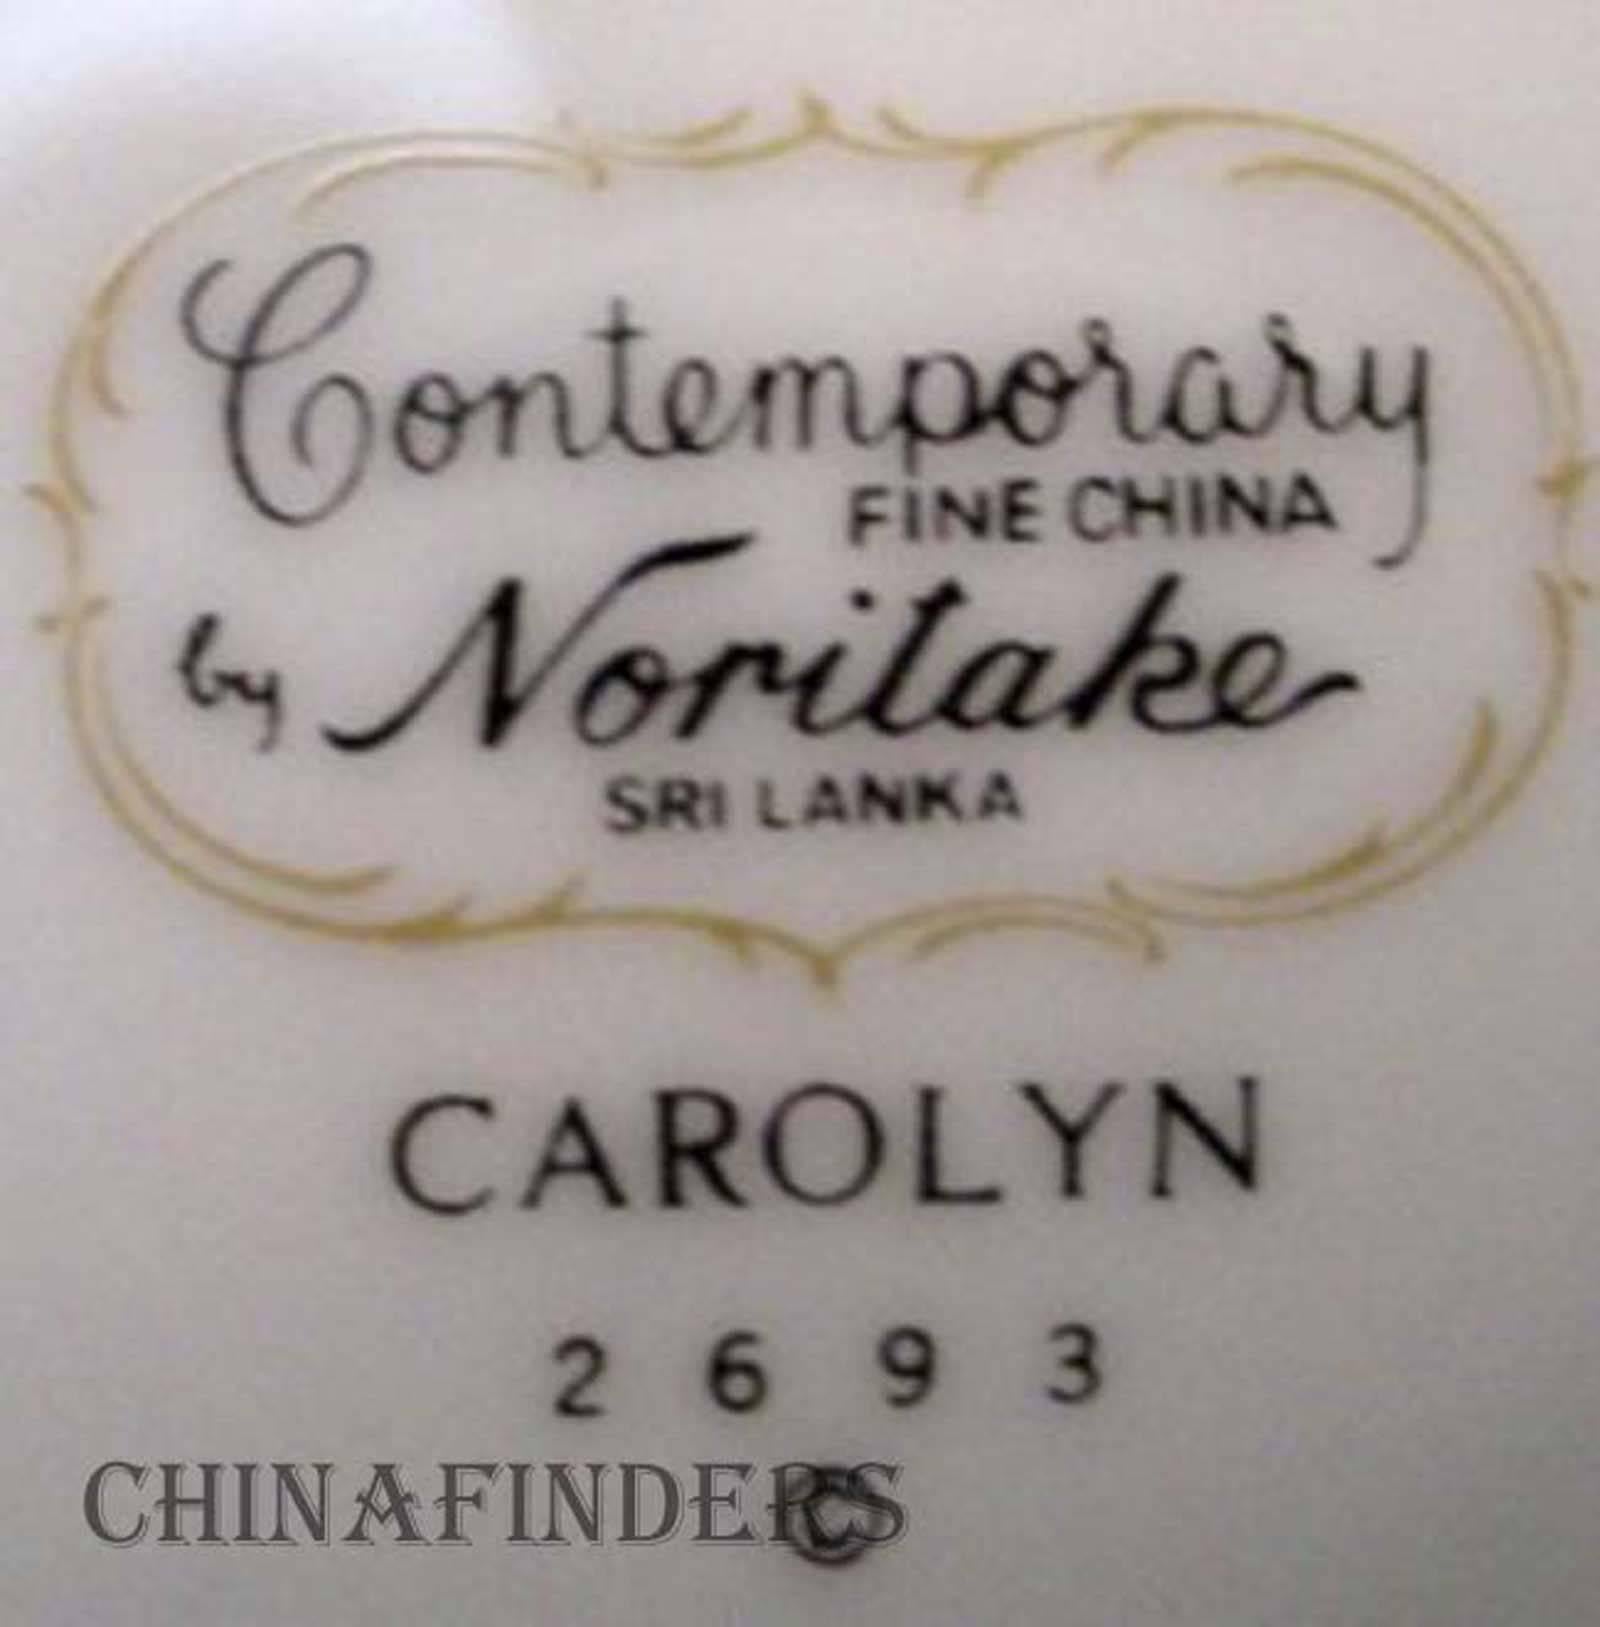 Noritake China Carolyn 2693 Pattern 65-Piece Set Service for 12 2